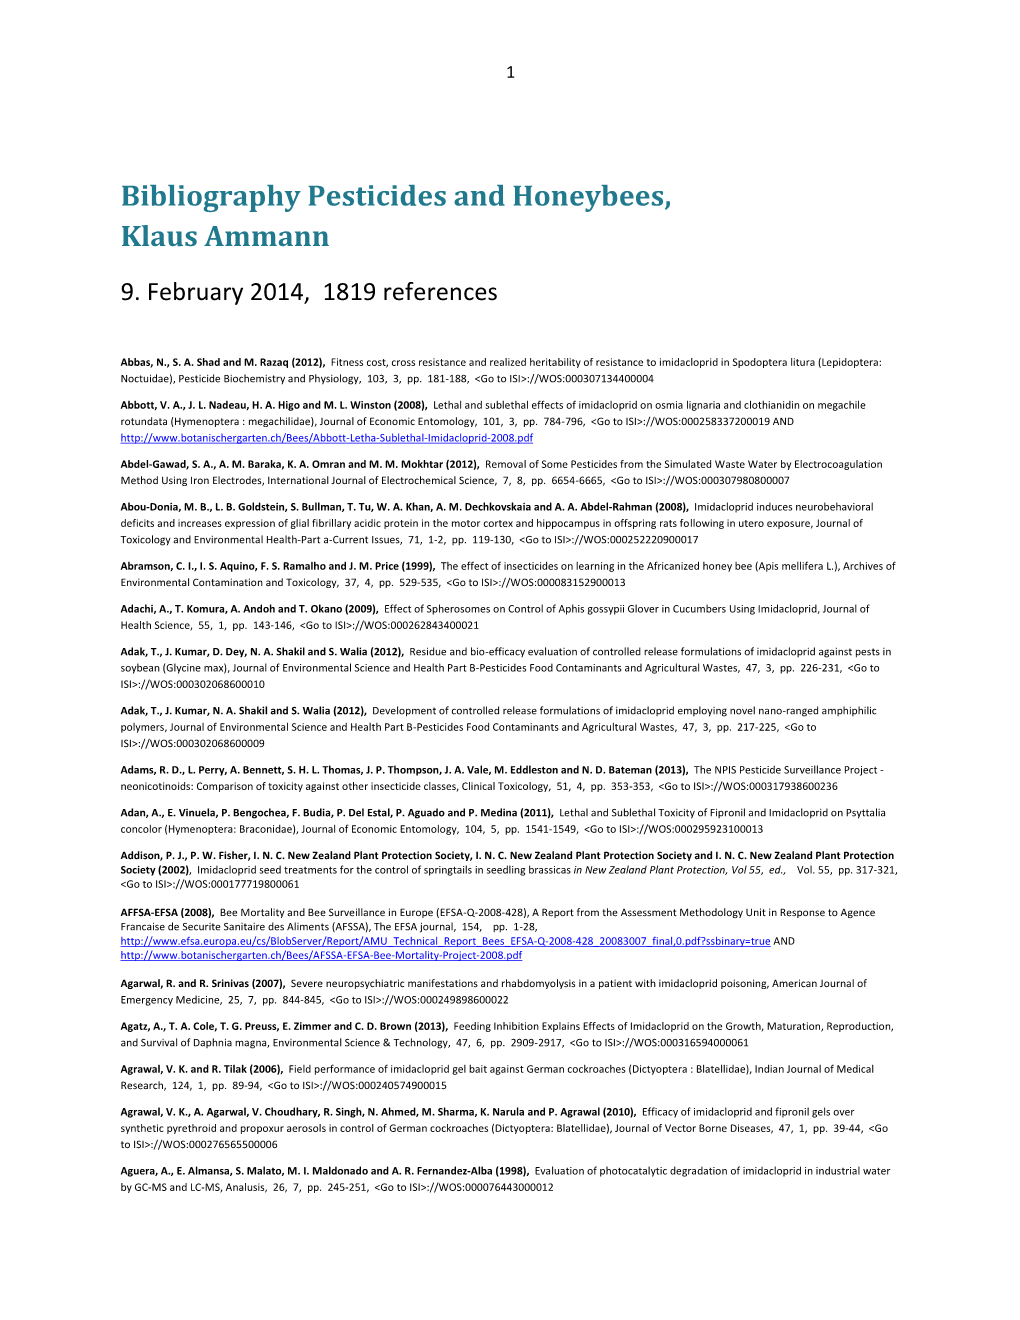 Bibliography Pesticides and Honeybees, Klaus Ammann 9